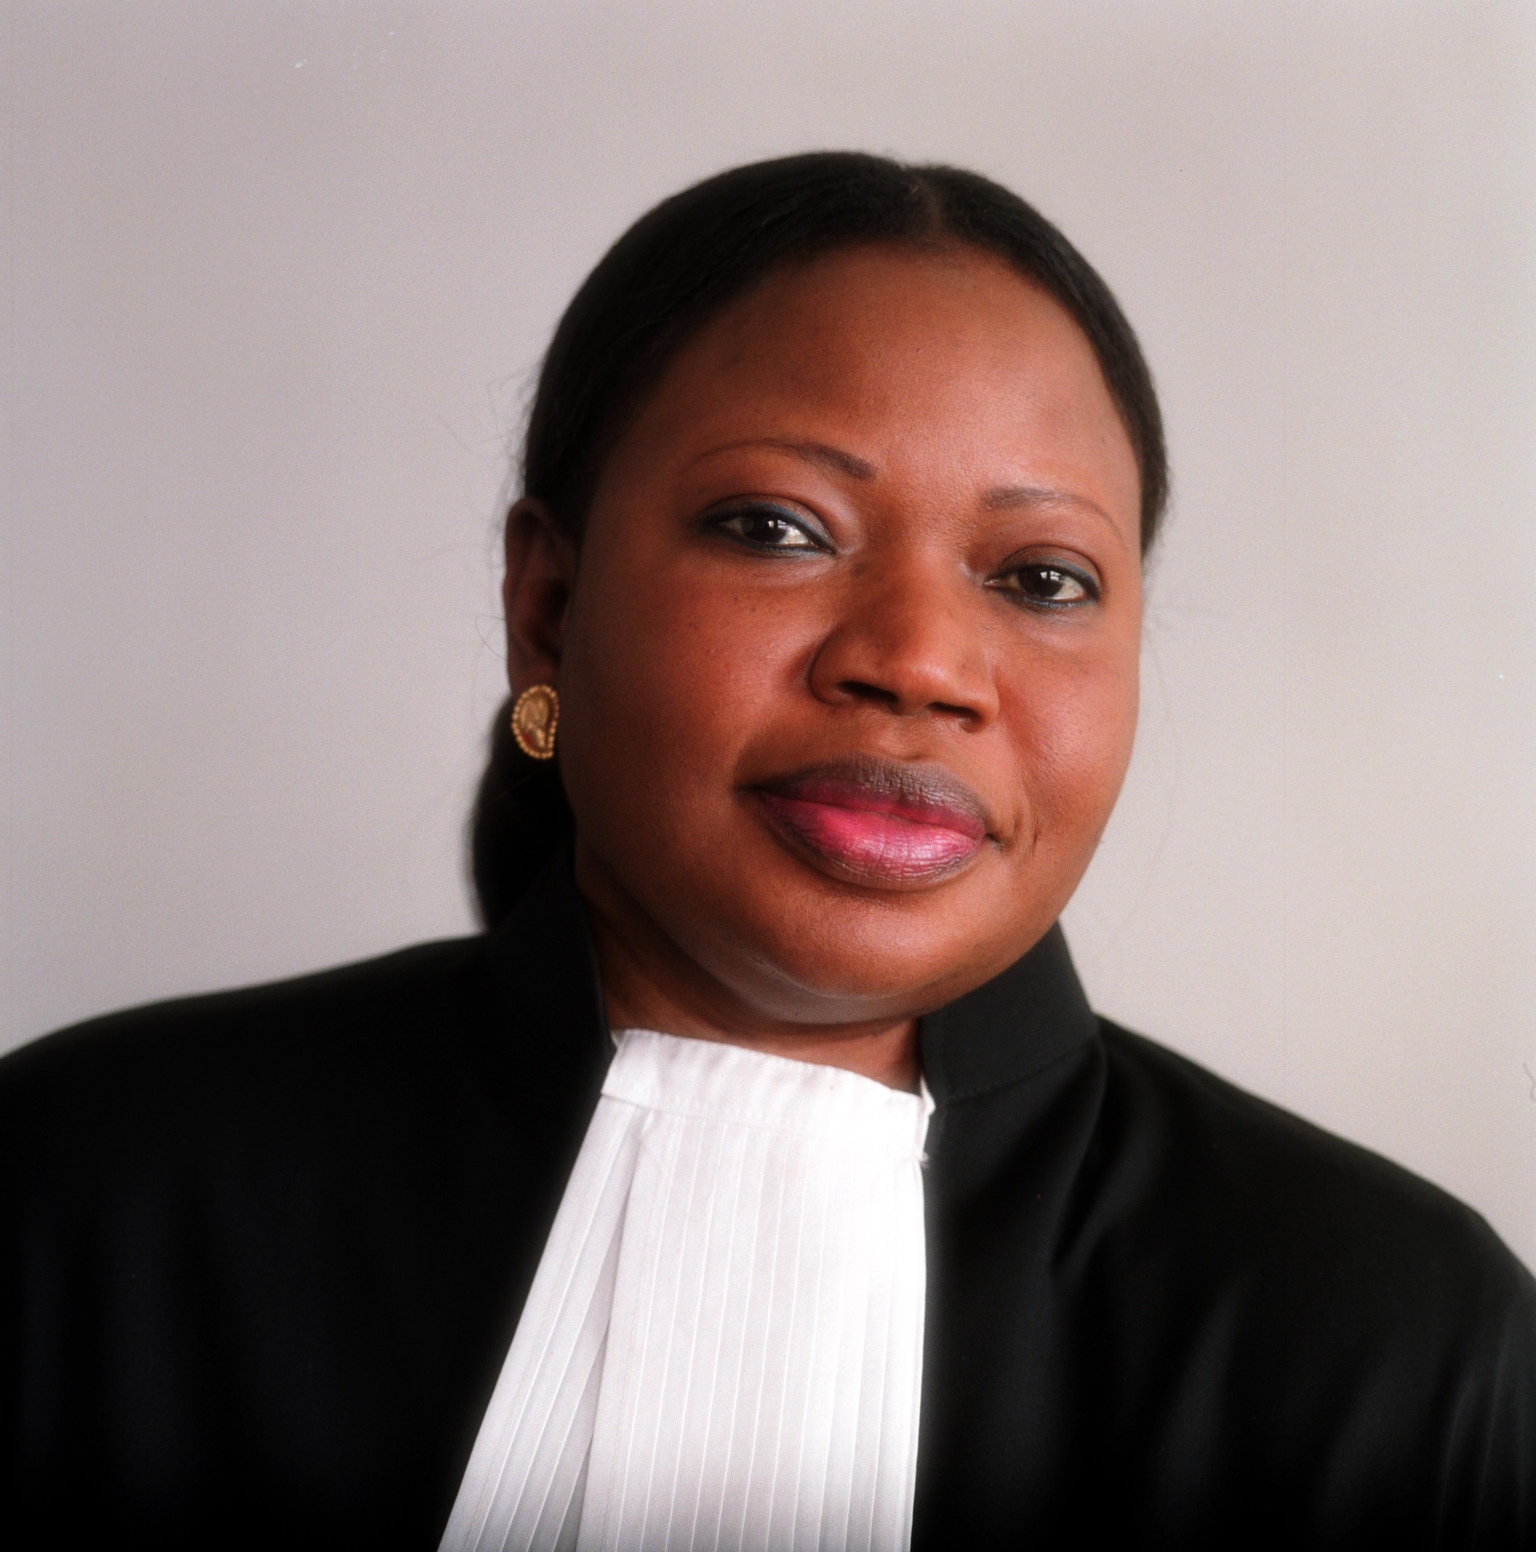 ICC Chief Prosecutor Fatou Bensouda